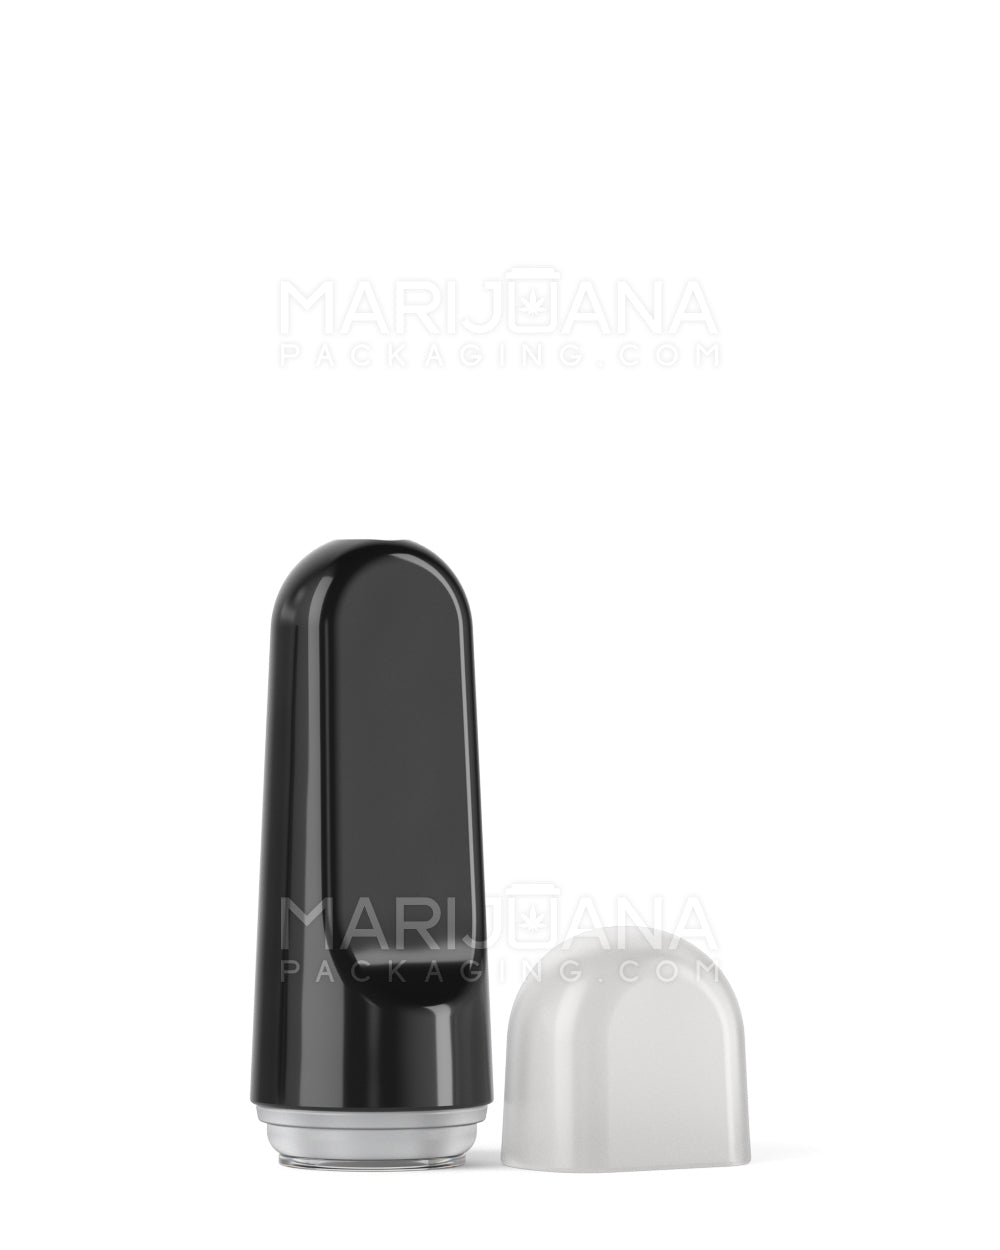 RAE | Flat Vape Mouthpiece for Hand Press Ceramic Cartridges | Black Ceramic - Hand Press - 3600 Count - 8